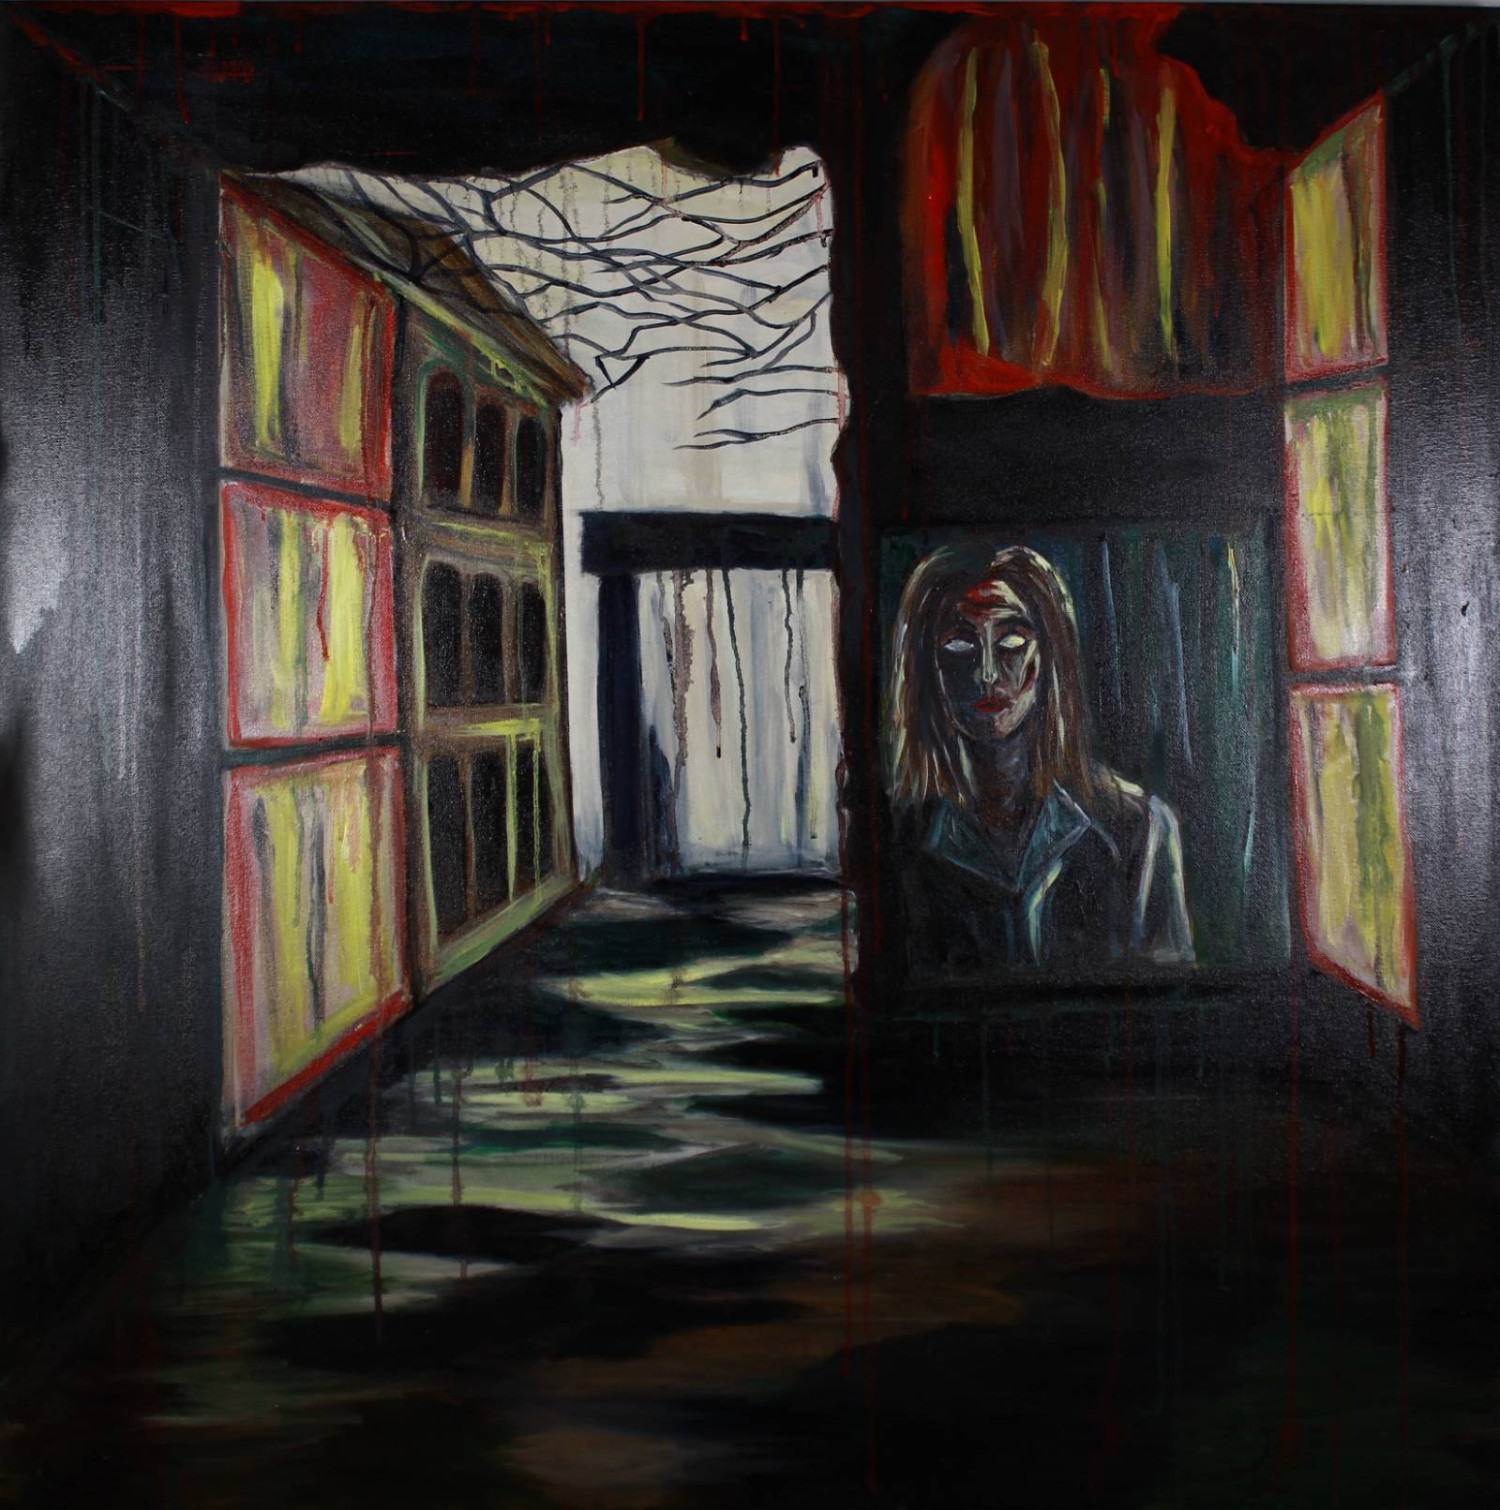 *Apocalyptic Self: A Bleeding Portrait of Despair and Destruction*, oil on canvas, 100 x 100cm